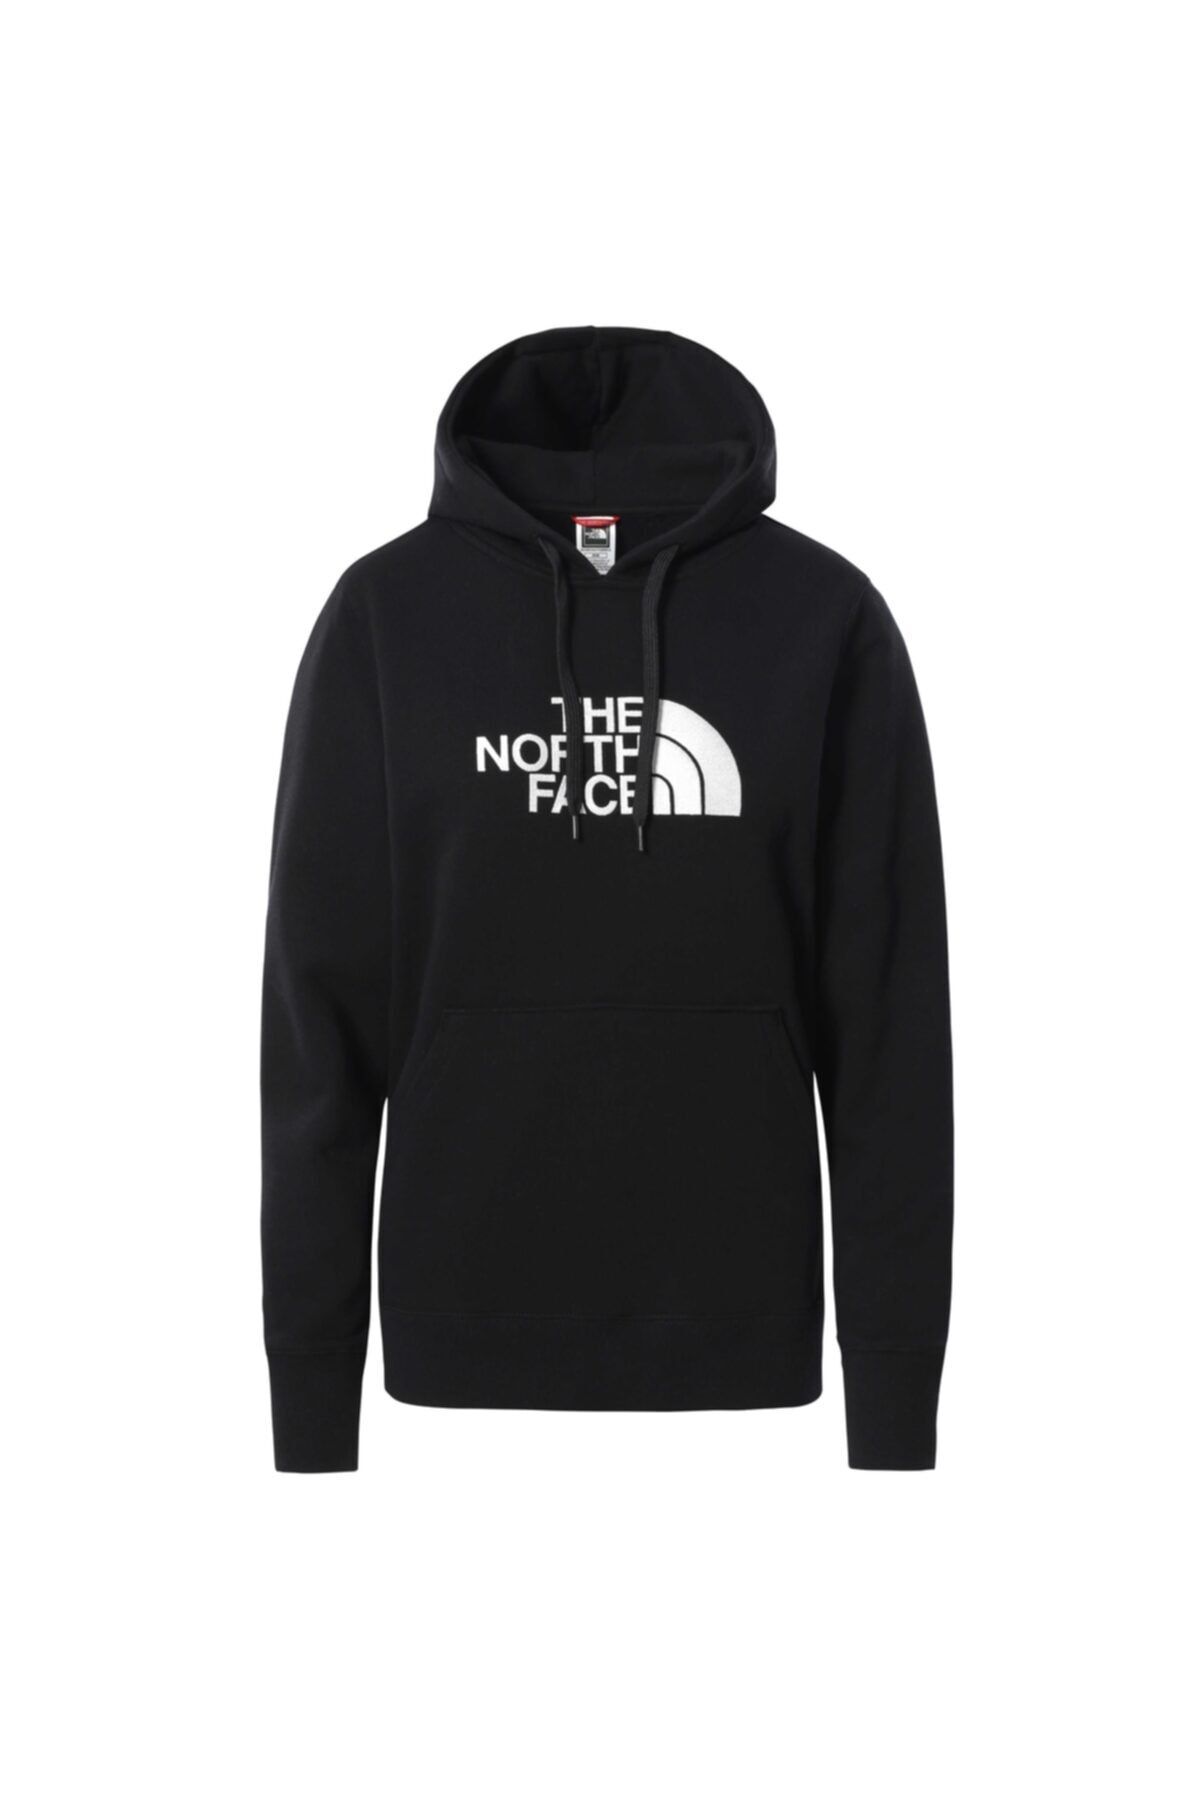 The North Face Drew Peak Pullover Kadın Sweatshirt - T955ecjk3